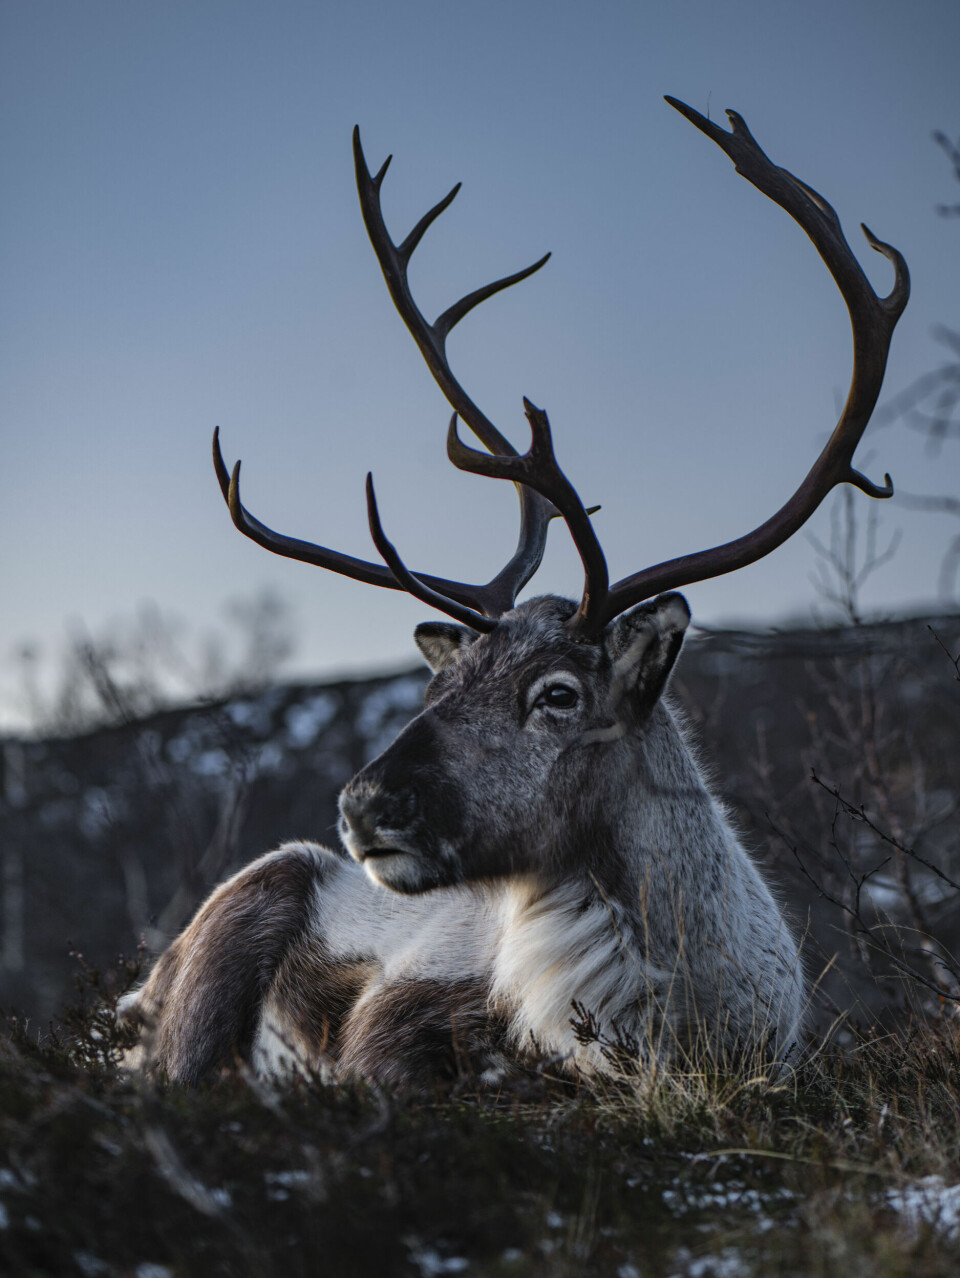 Reindeer can chew their cud whilst awake or sleeping.